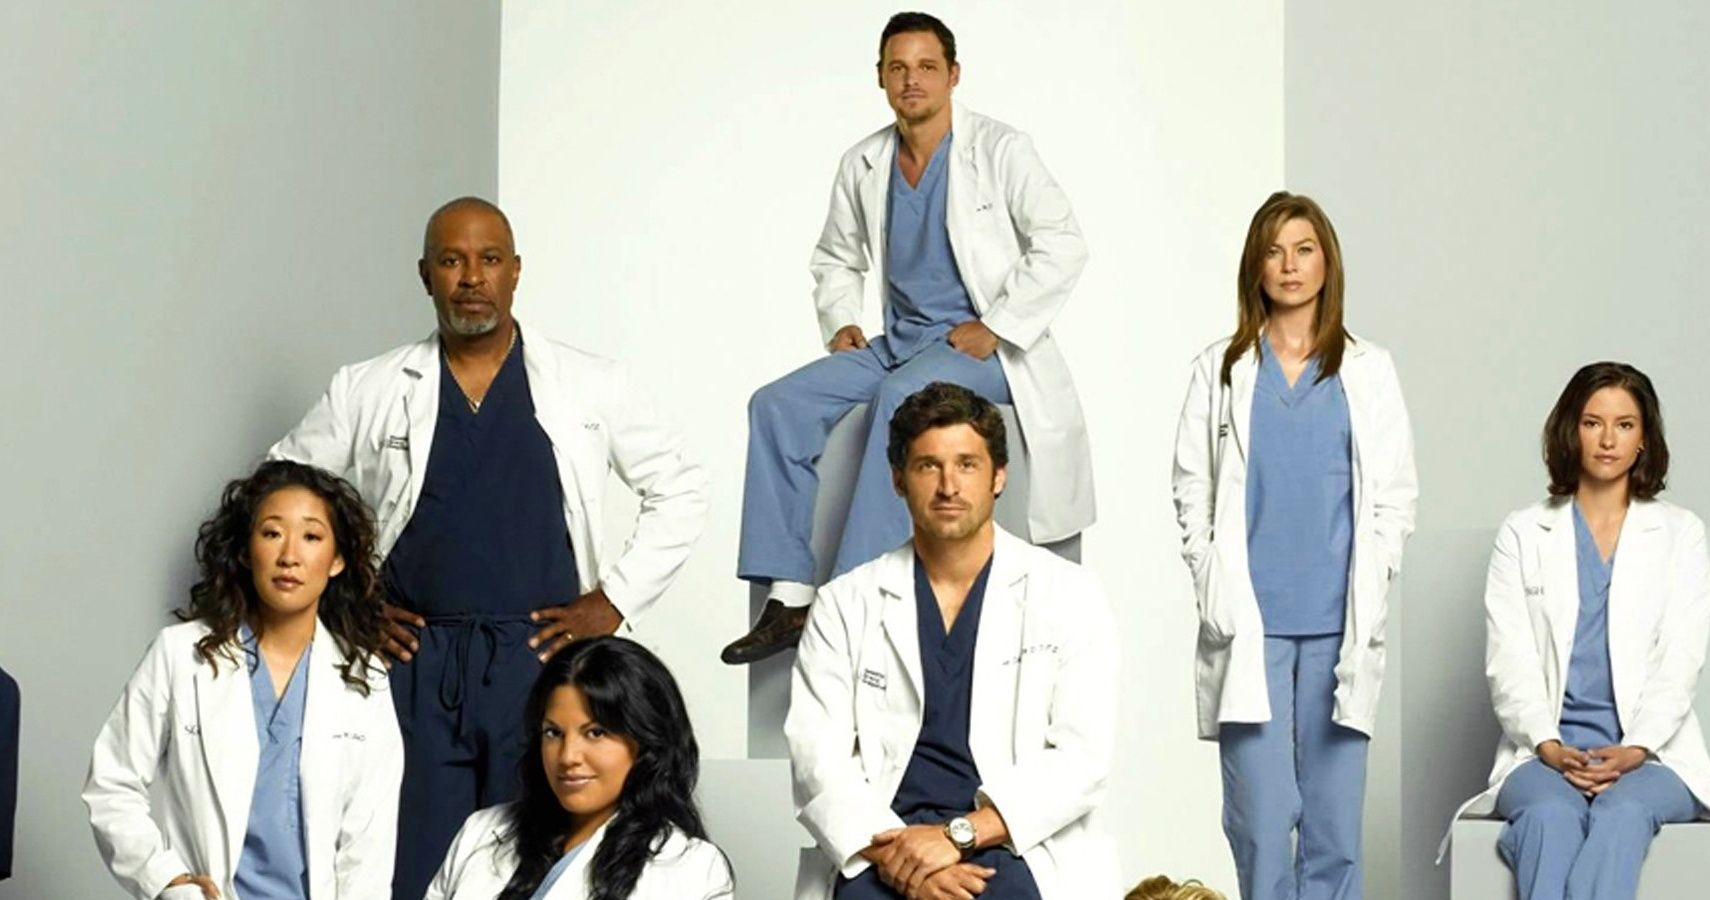 Greys Anatomy Best Episodes Of Season 4 Ranked (According To IMDb)